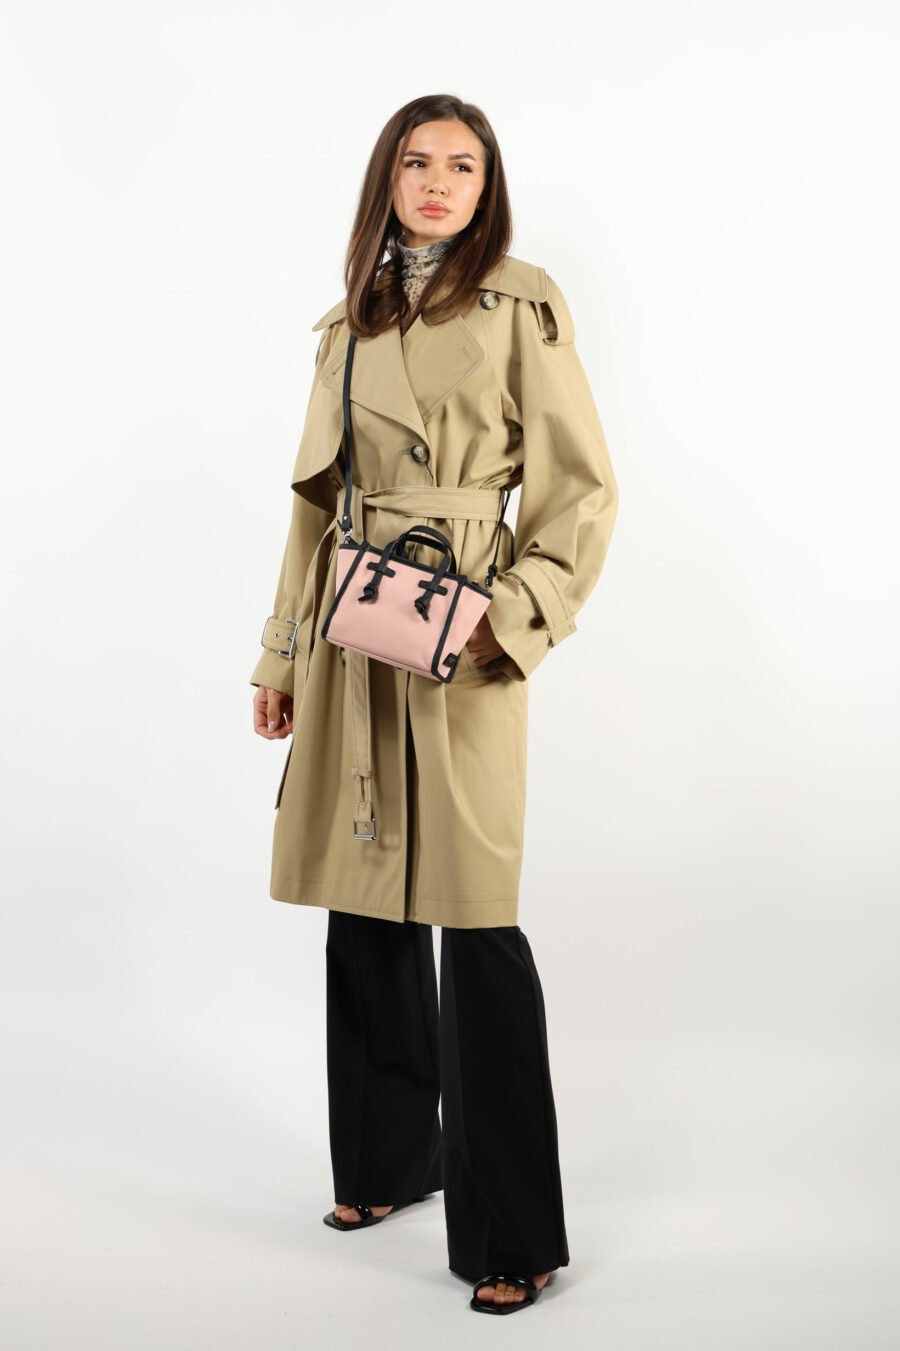 Mini shopper bag "Miss Marcella" pink and minilogo - 109324